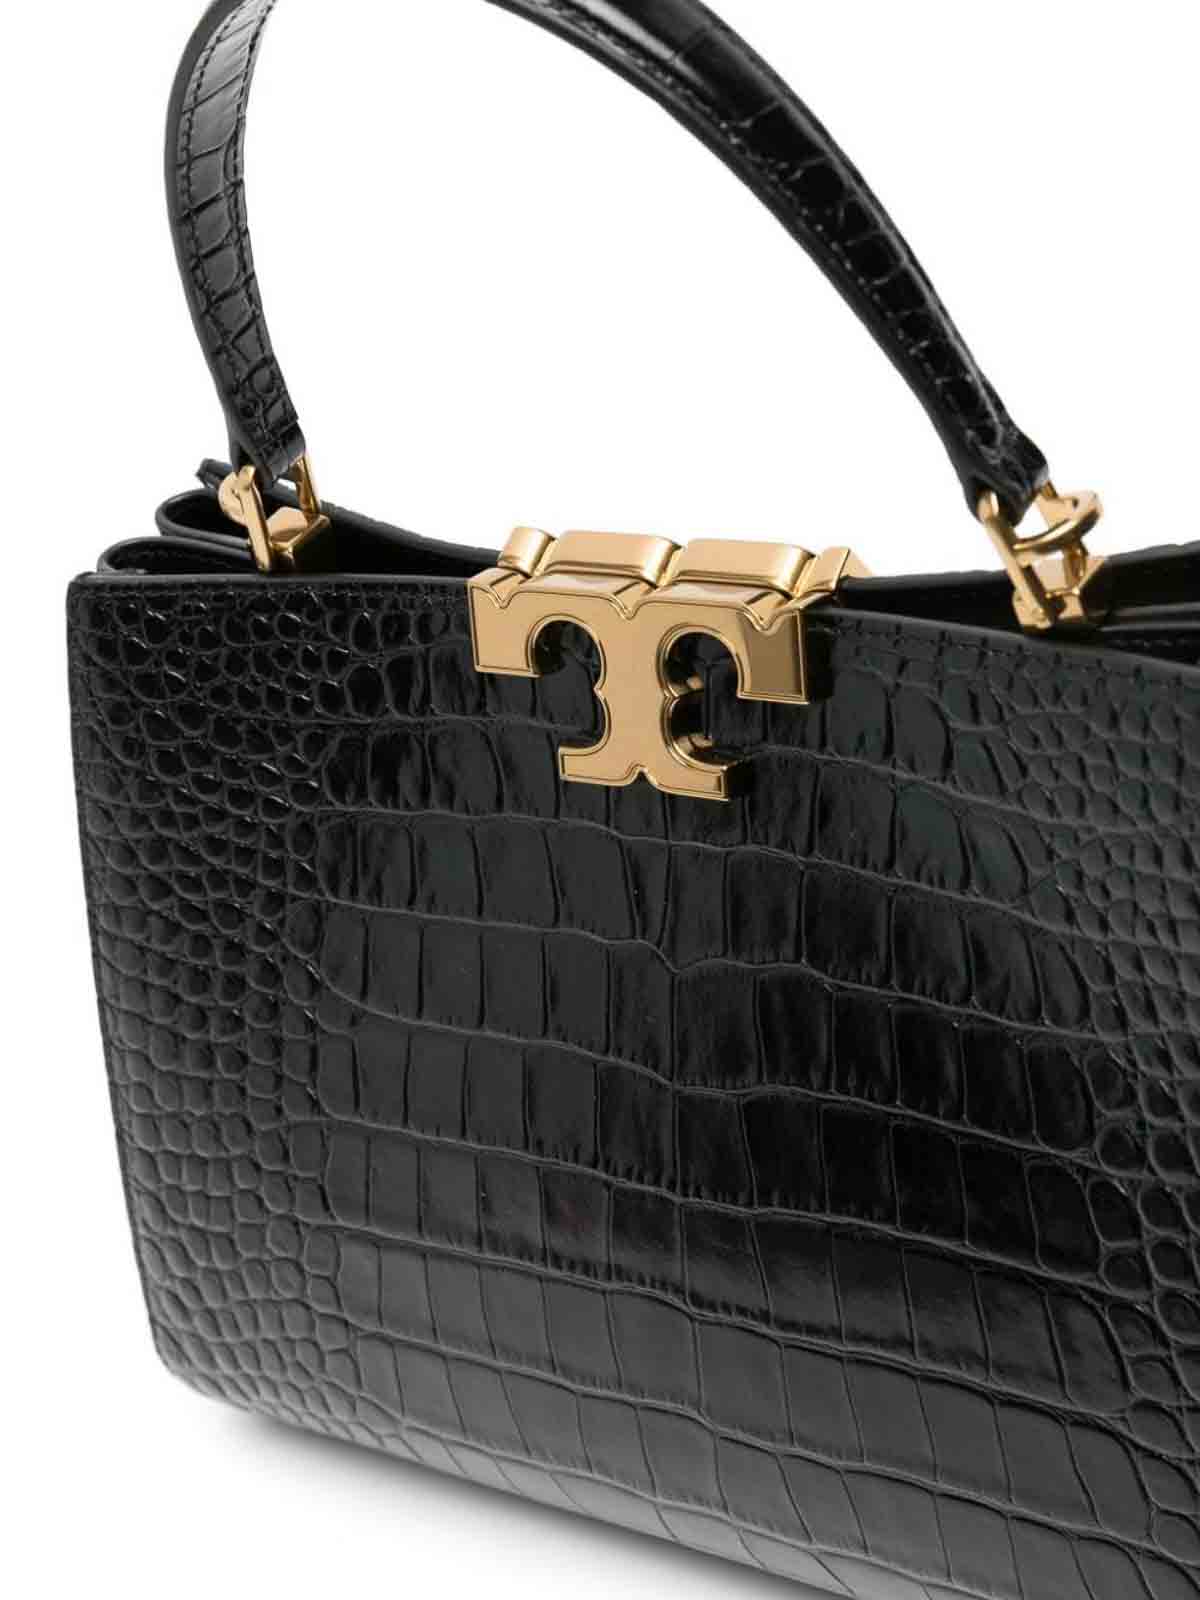 Tory Burch Women's Eleanor Embossed Small Convertible Shoulder Bag, Black,  One Size: Handbags